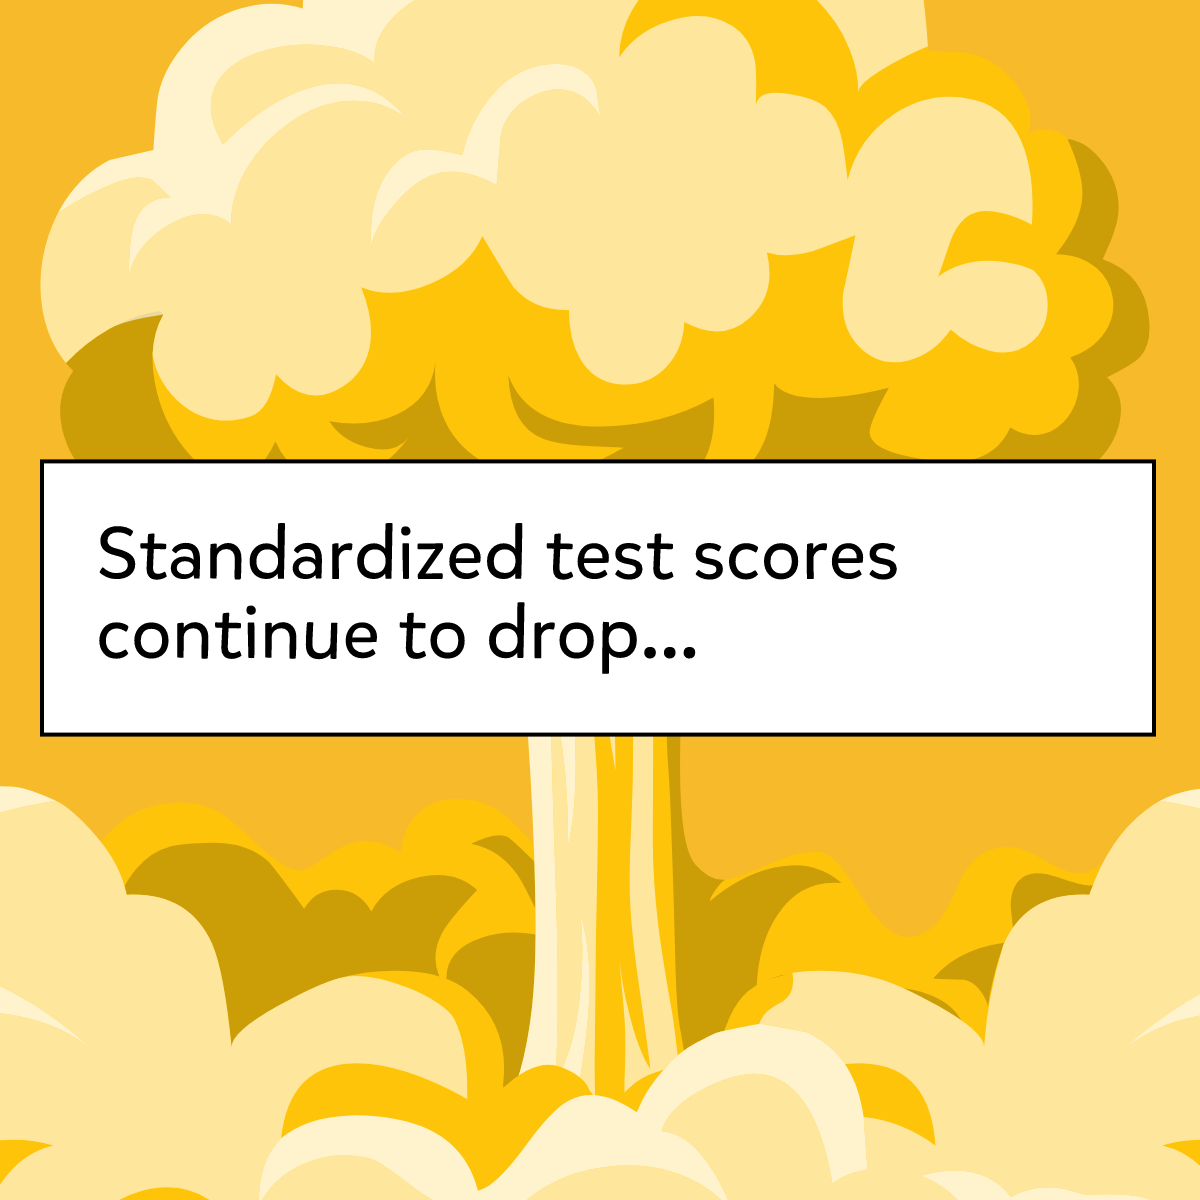 Standardized test scores continue to drop...